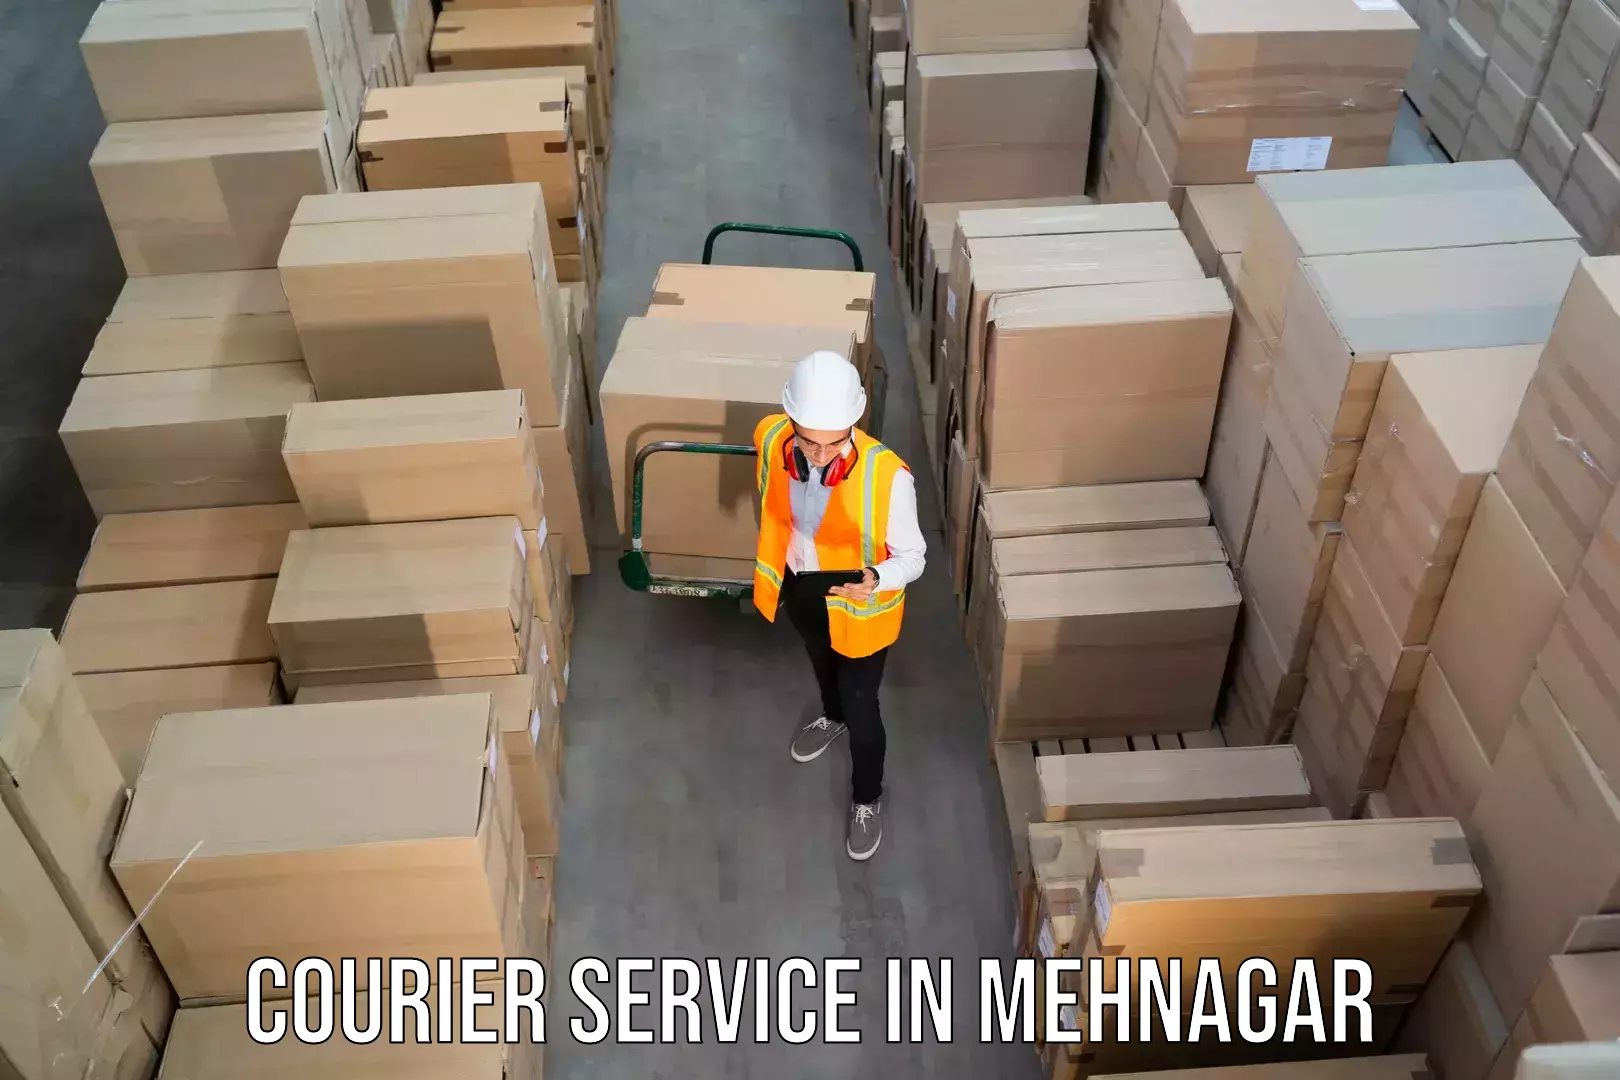 Courier membership in Mehnagar